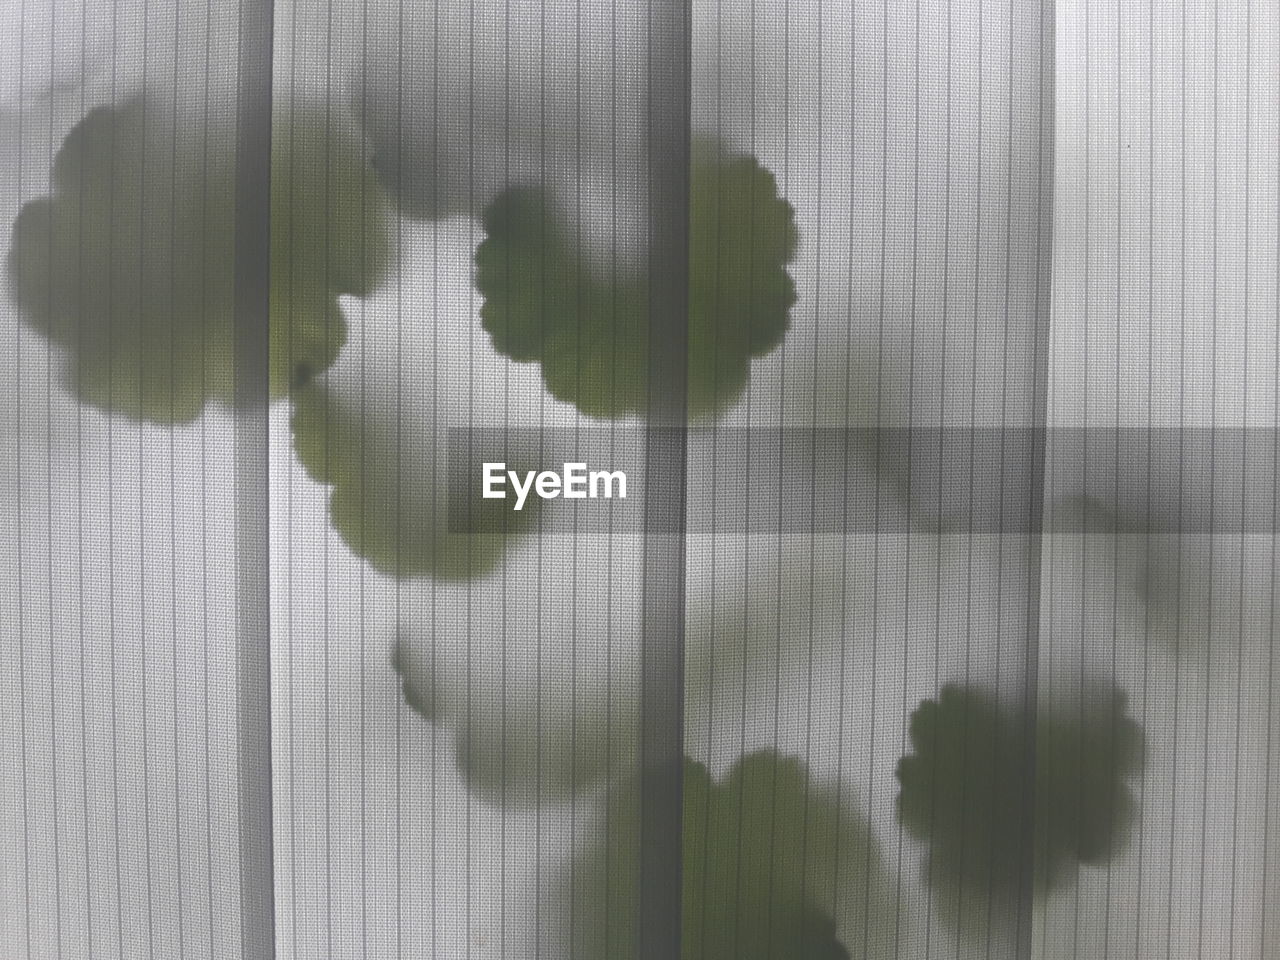 Leaf shadow on blinds